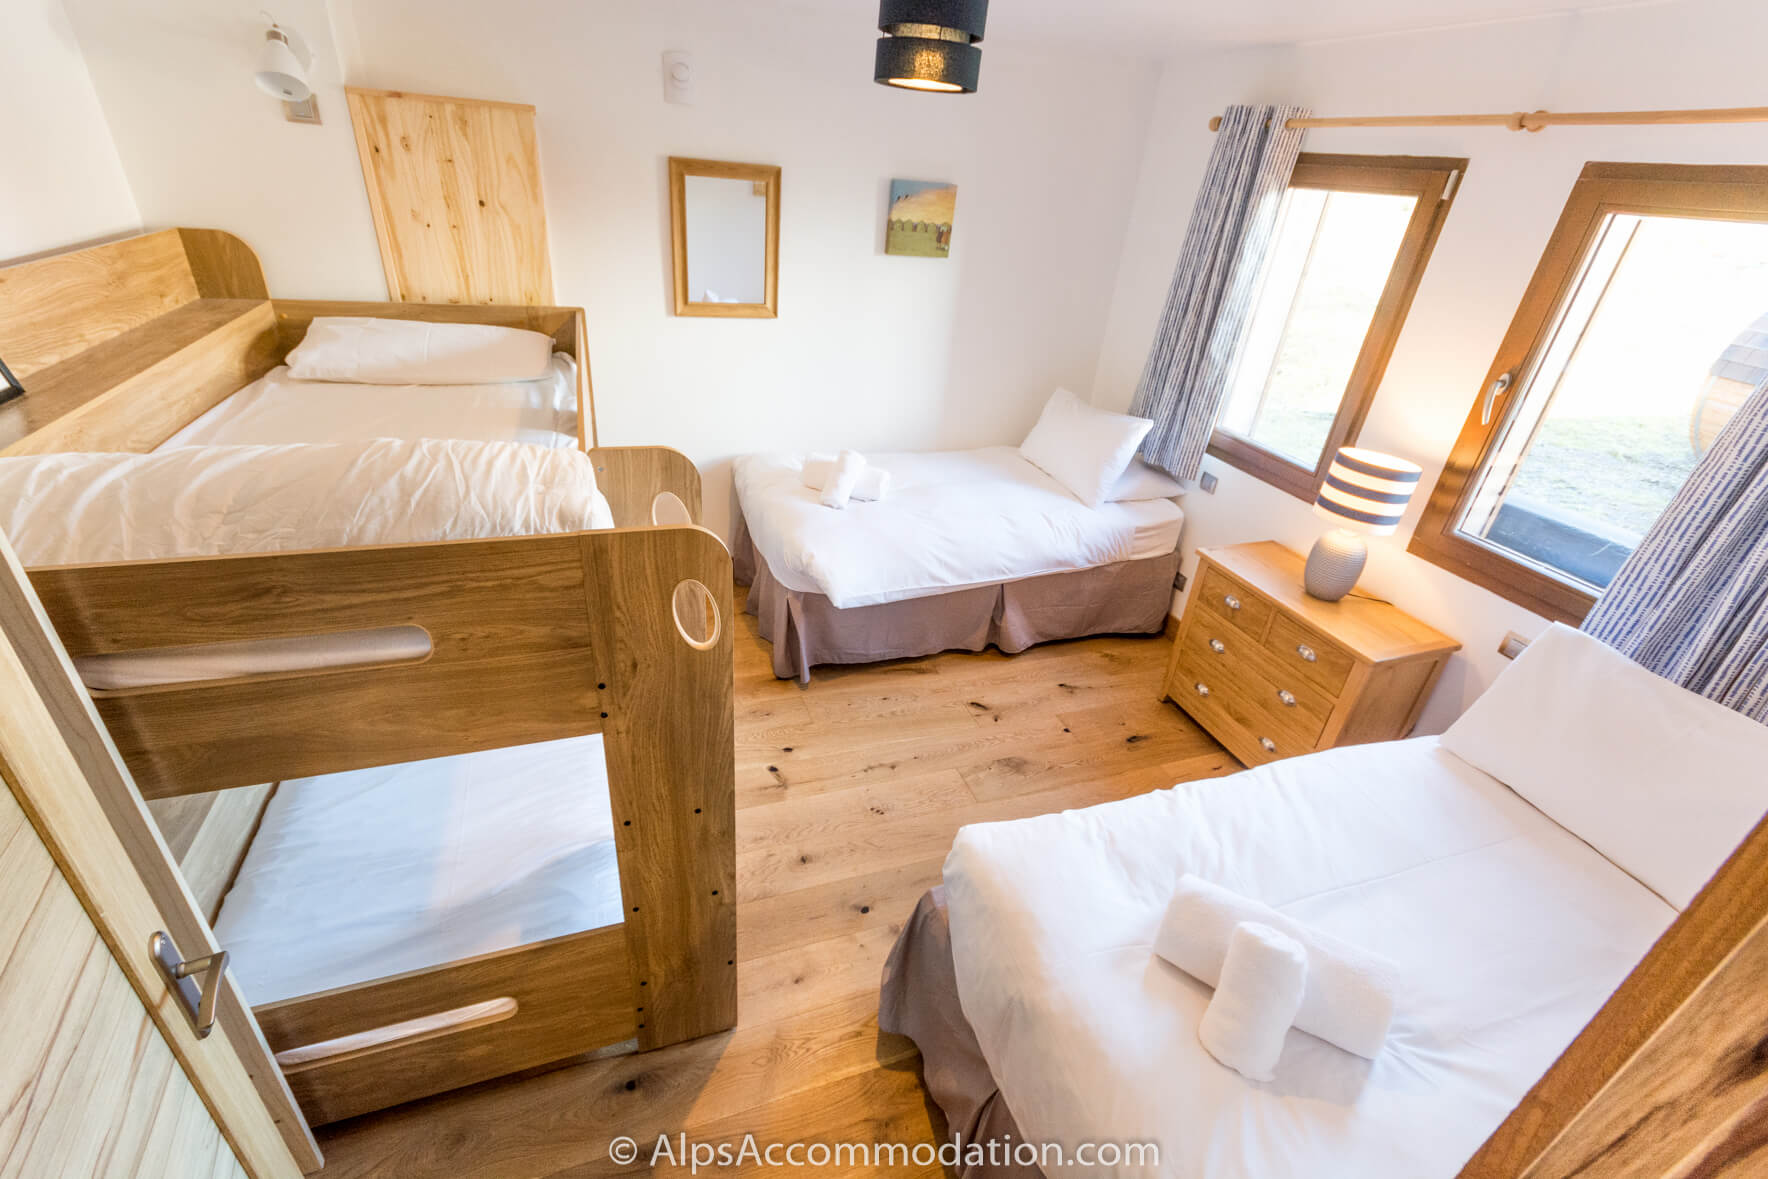 Chalet Gentian Samoëns - Quad bedroom with full size bunk beds and adjacent family bathroom